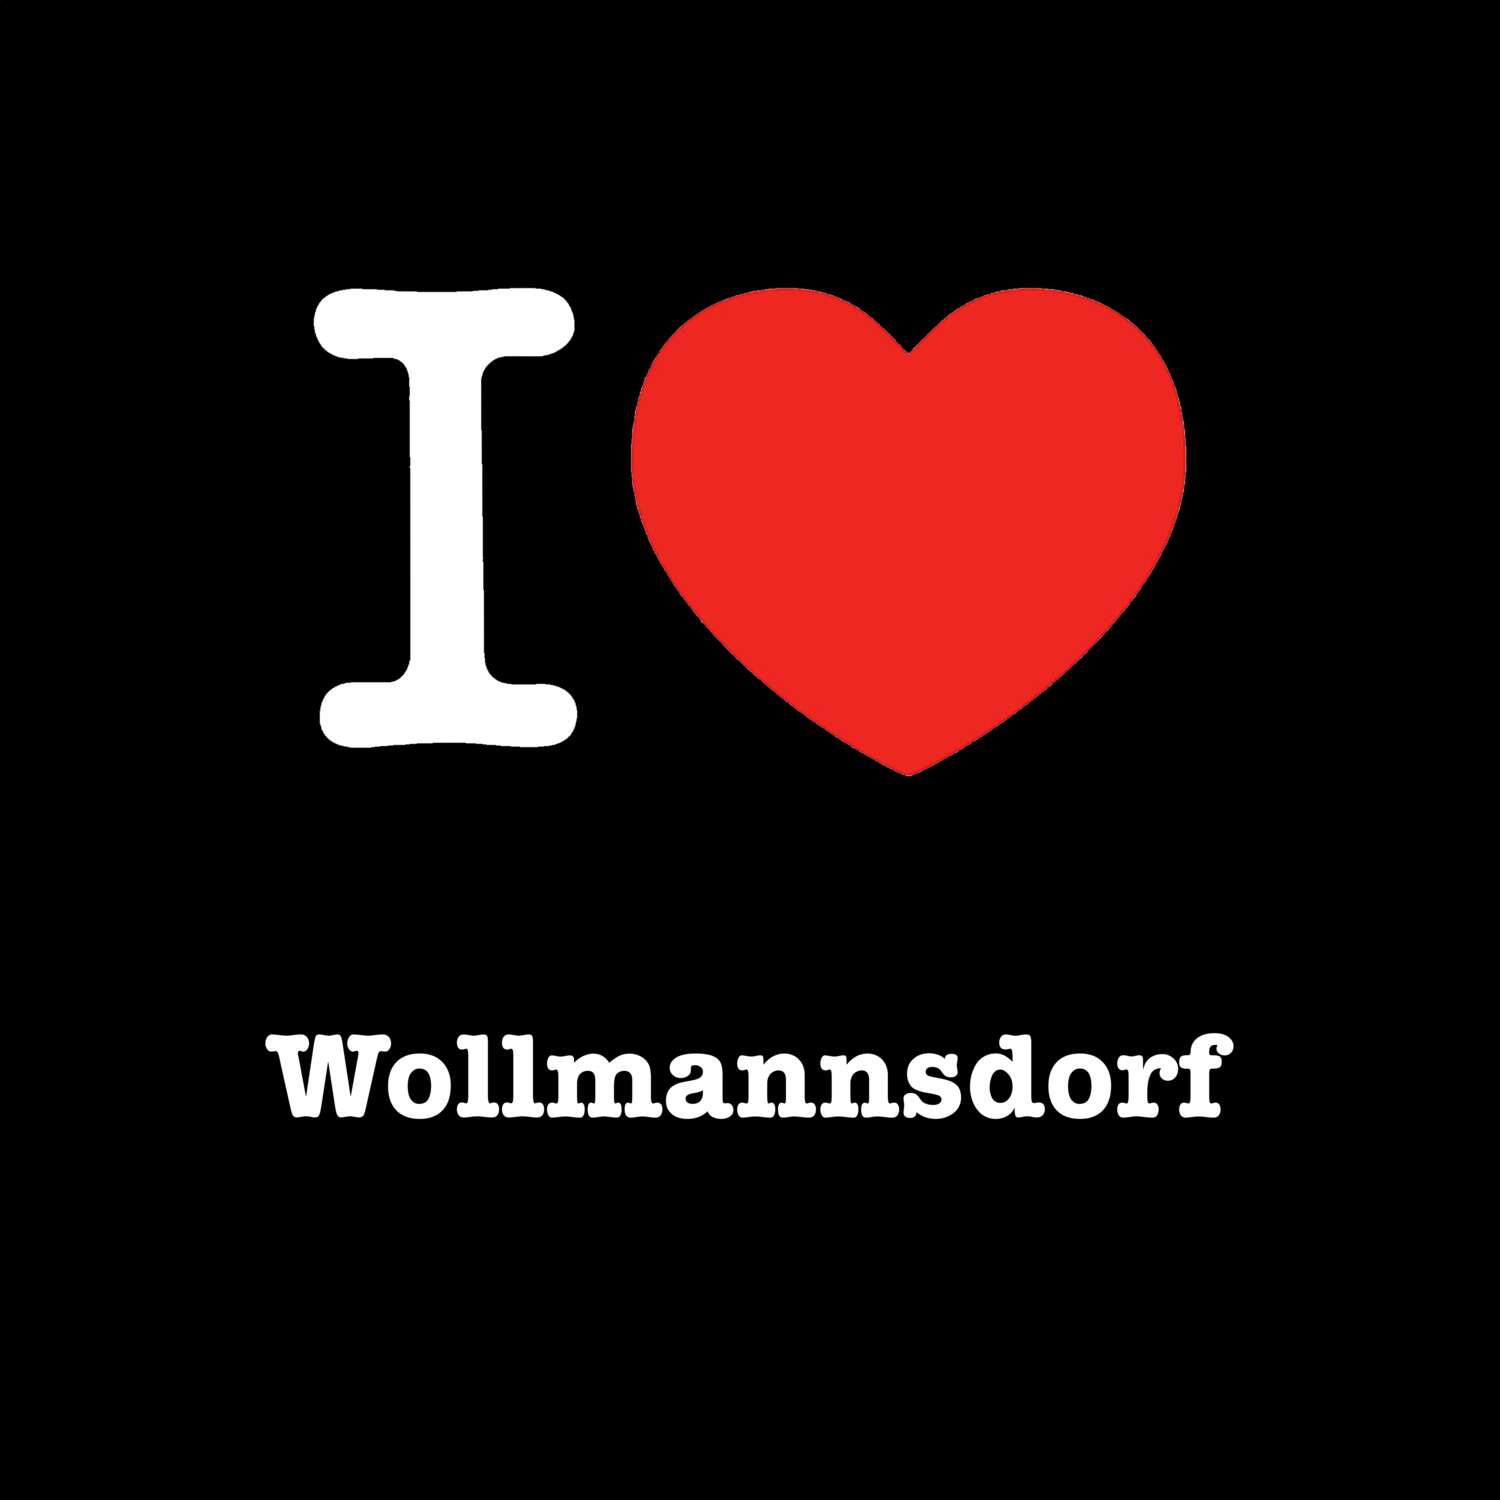 Wollmannsdorf T-Shirt »I love«